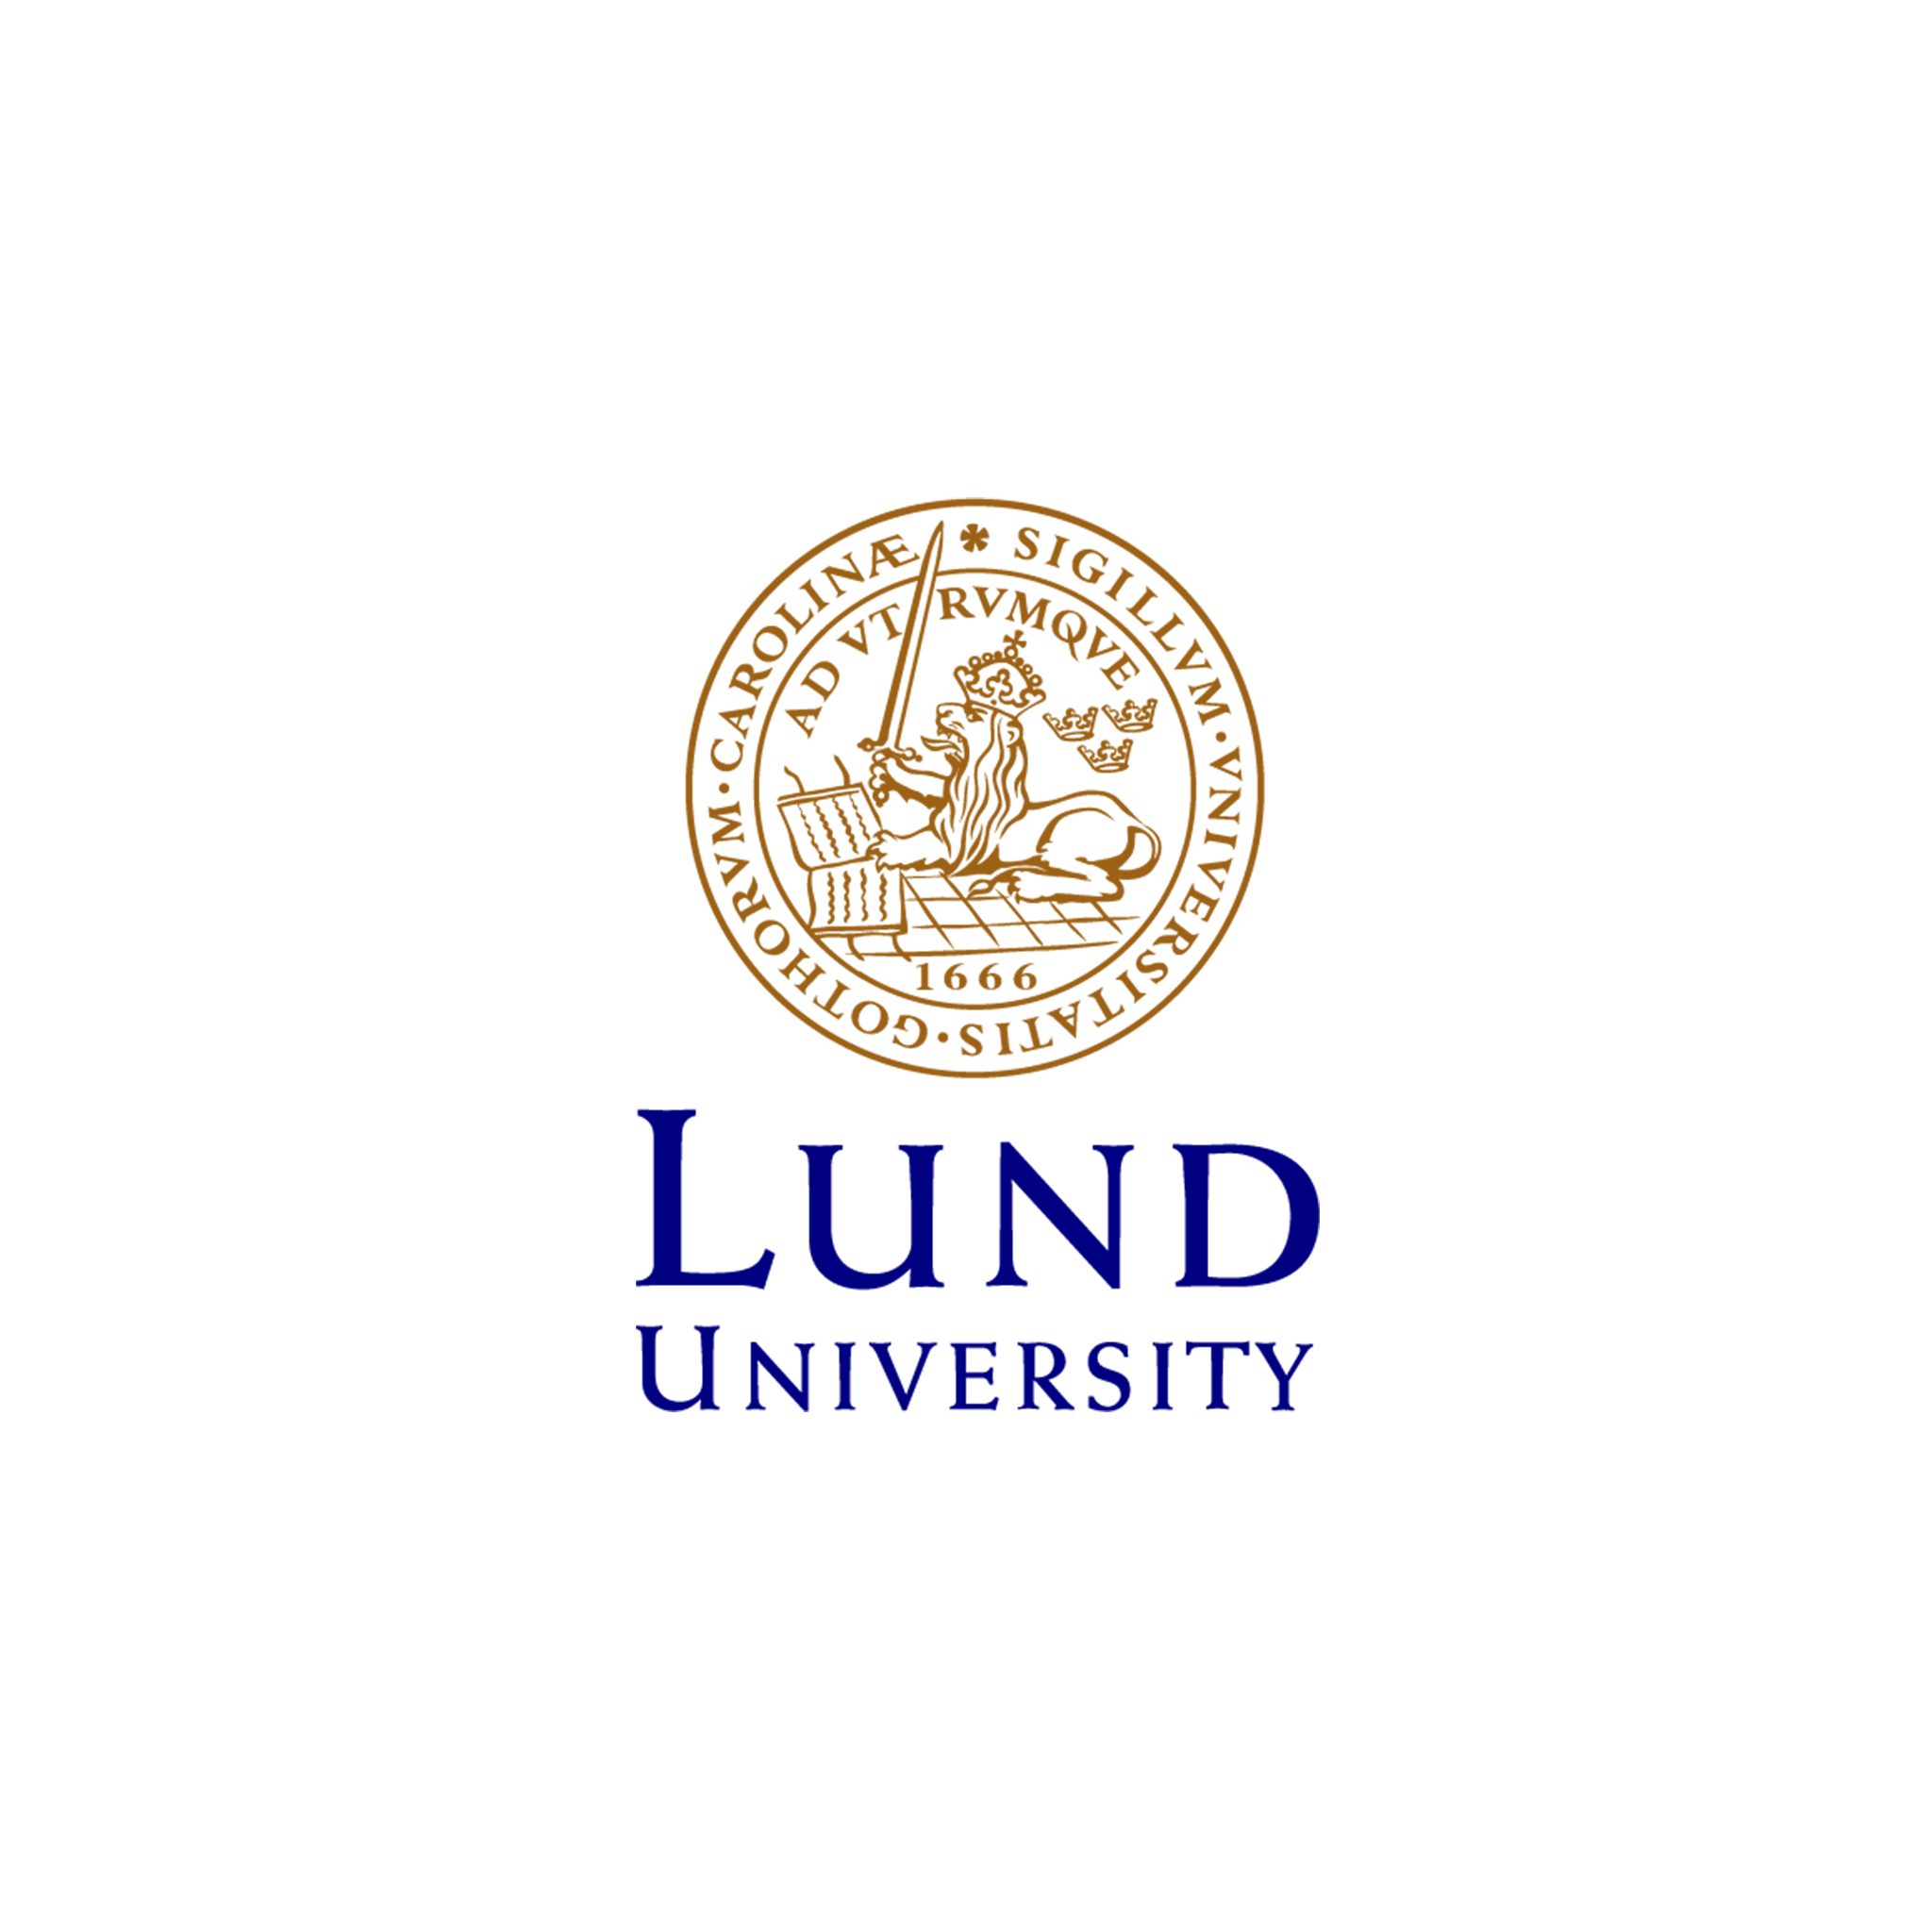 Lund University's logo in colour